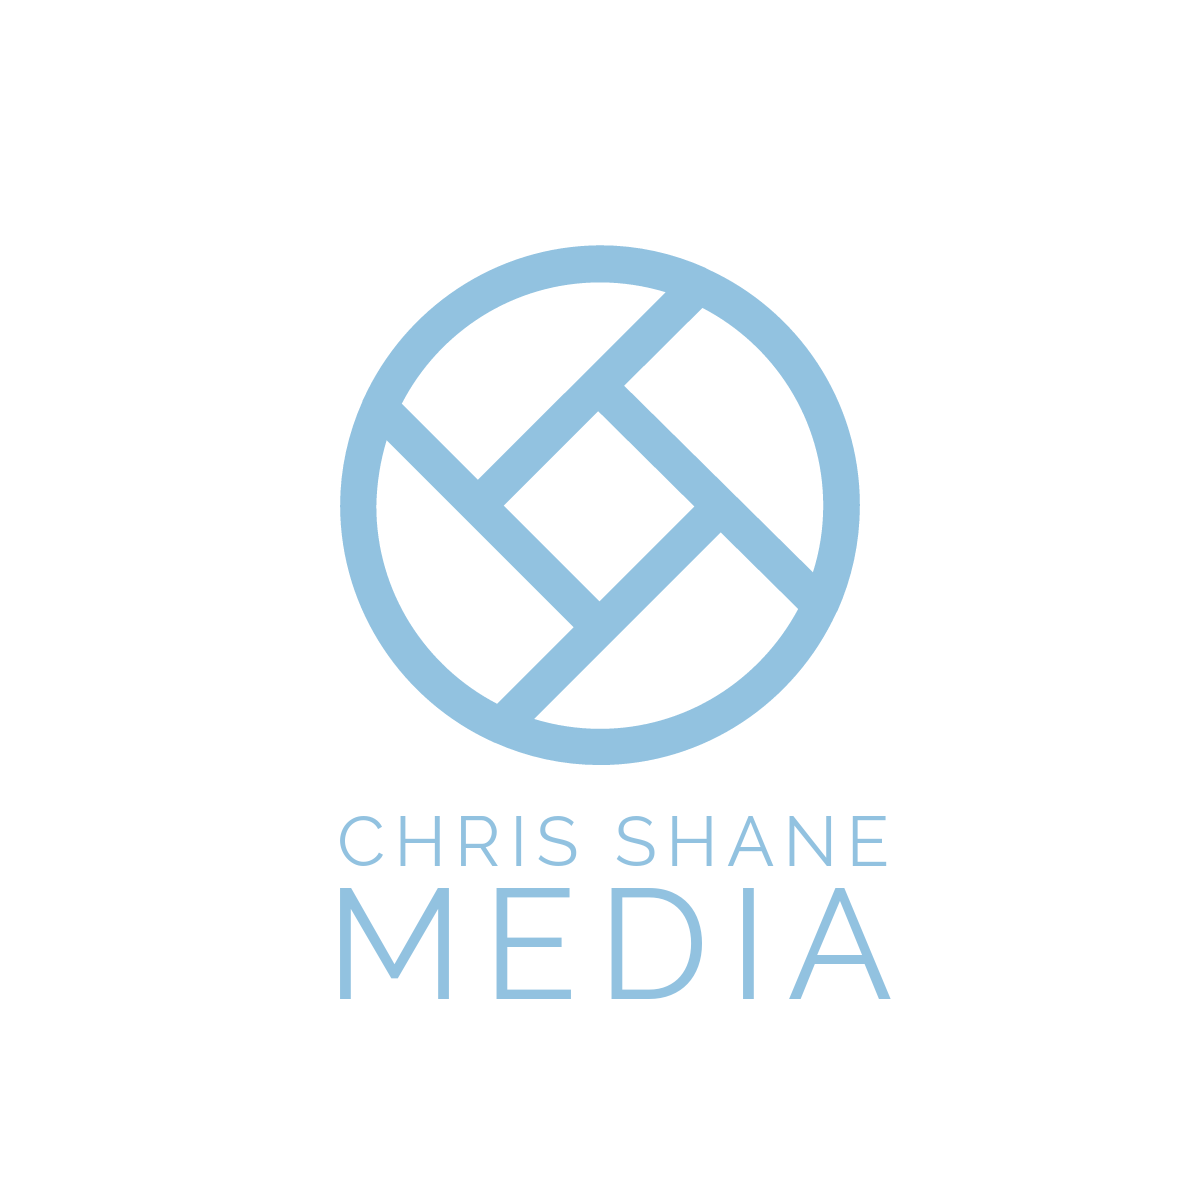 Chris Shane Media